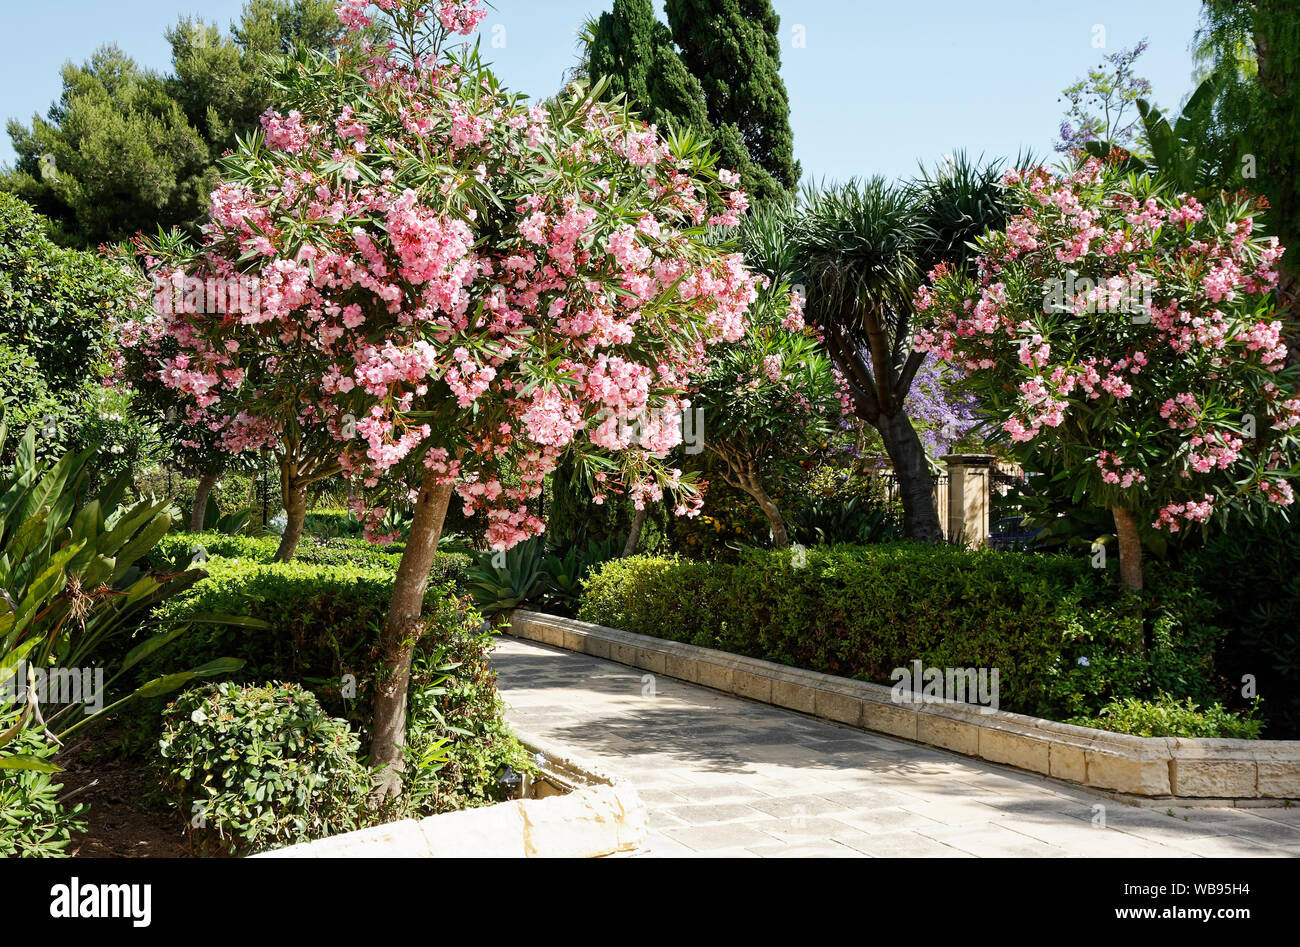 garden, stone walking path, trees, shrubs, flowers, tranquil, pink Oleander, tranquil, Corinthia Palace Hotel; Europe; Balzan; Malta; spring; horizont Stock Photo